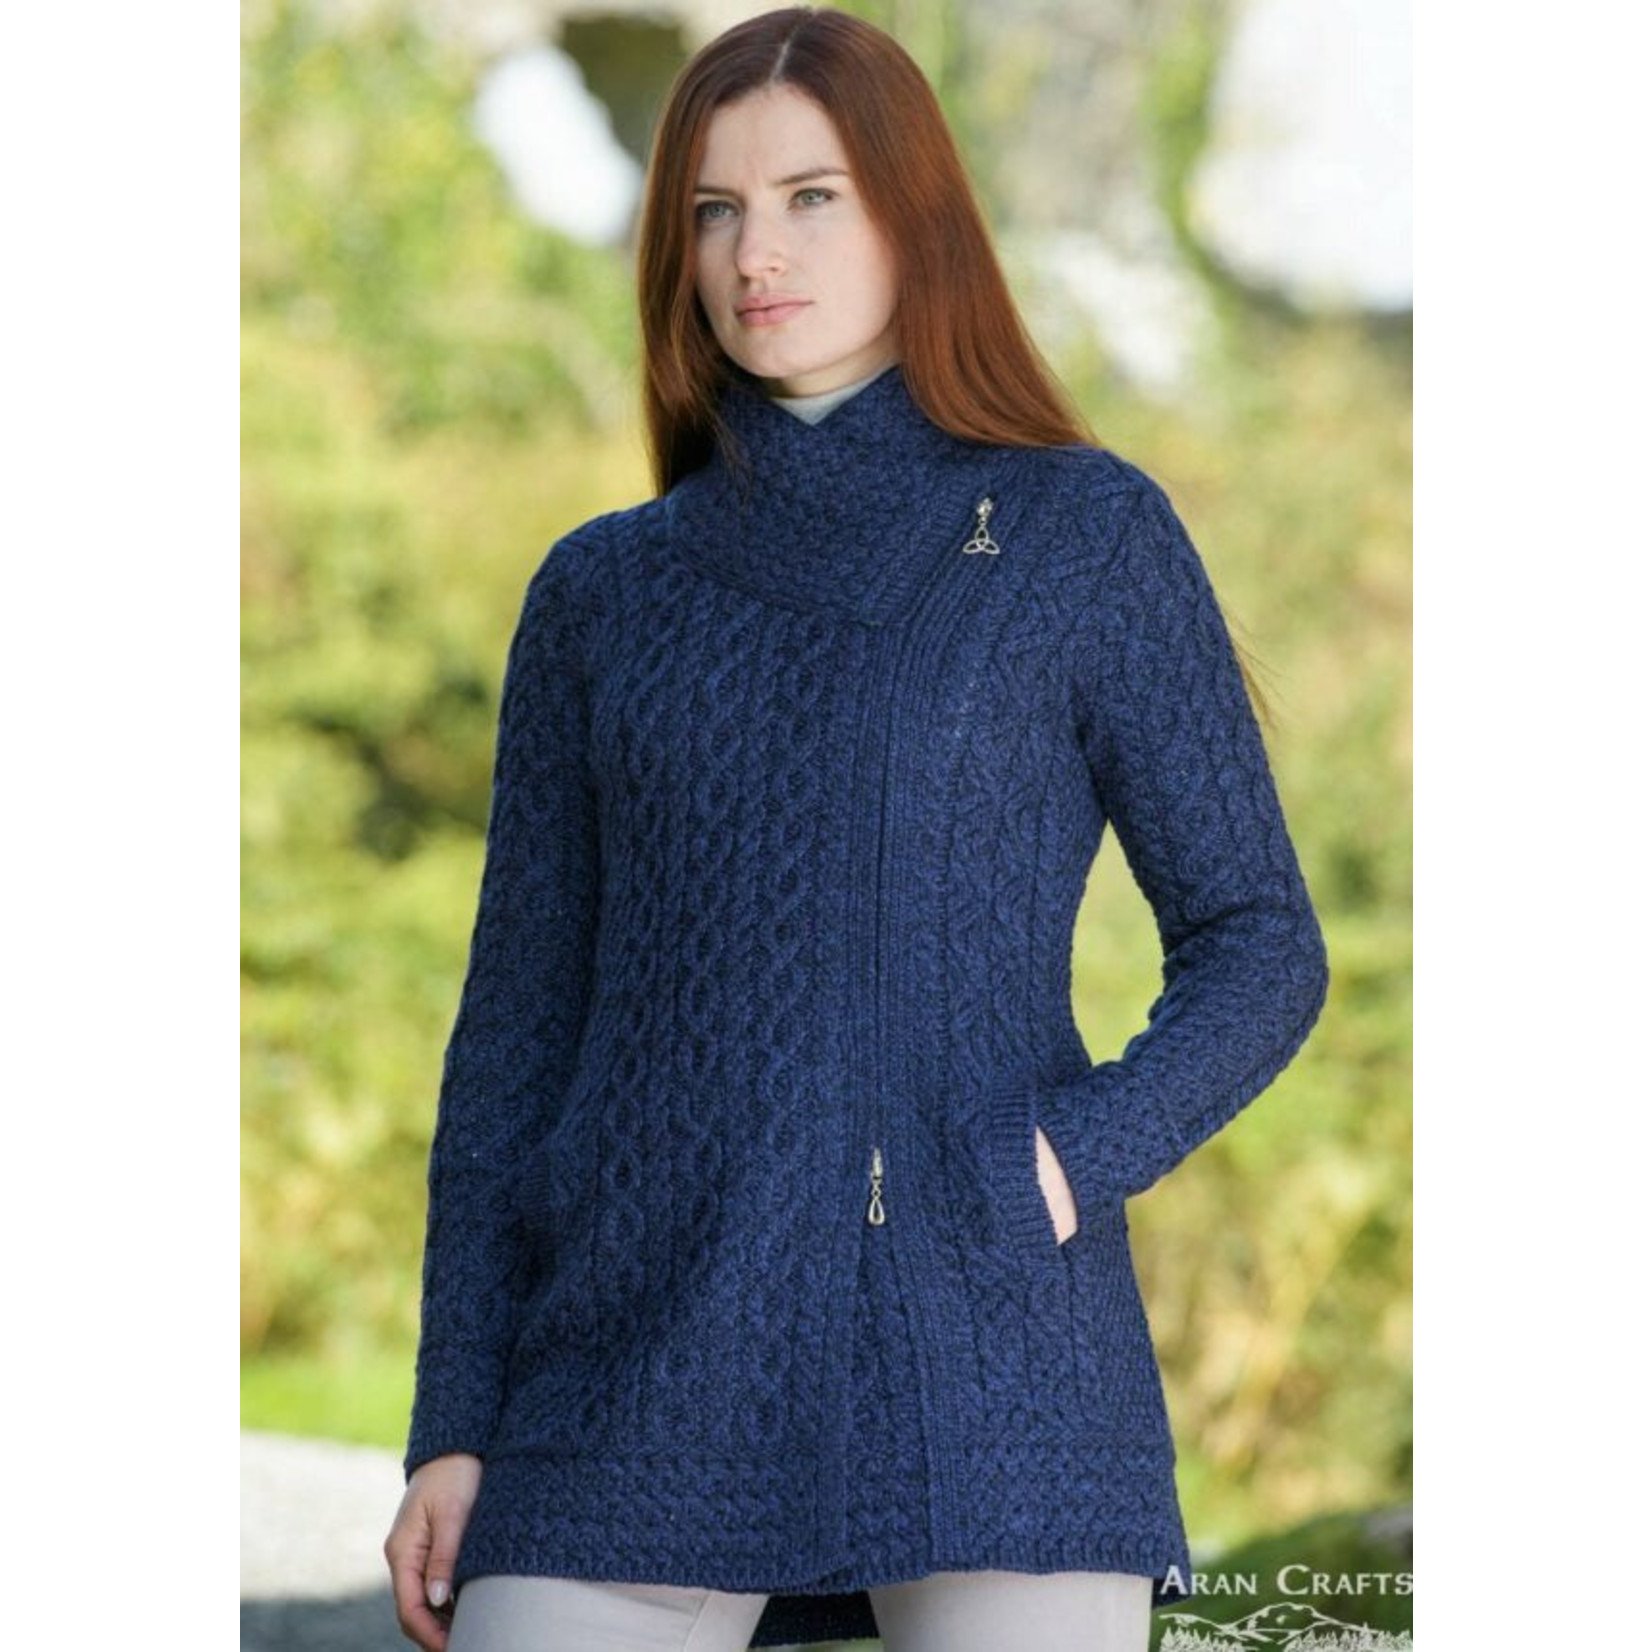 West End Knitwear Aran crafts Irish Sweater Athenry